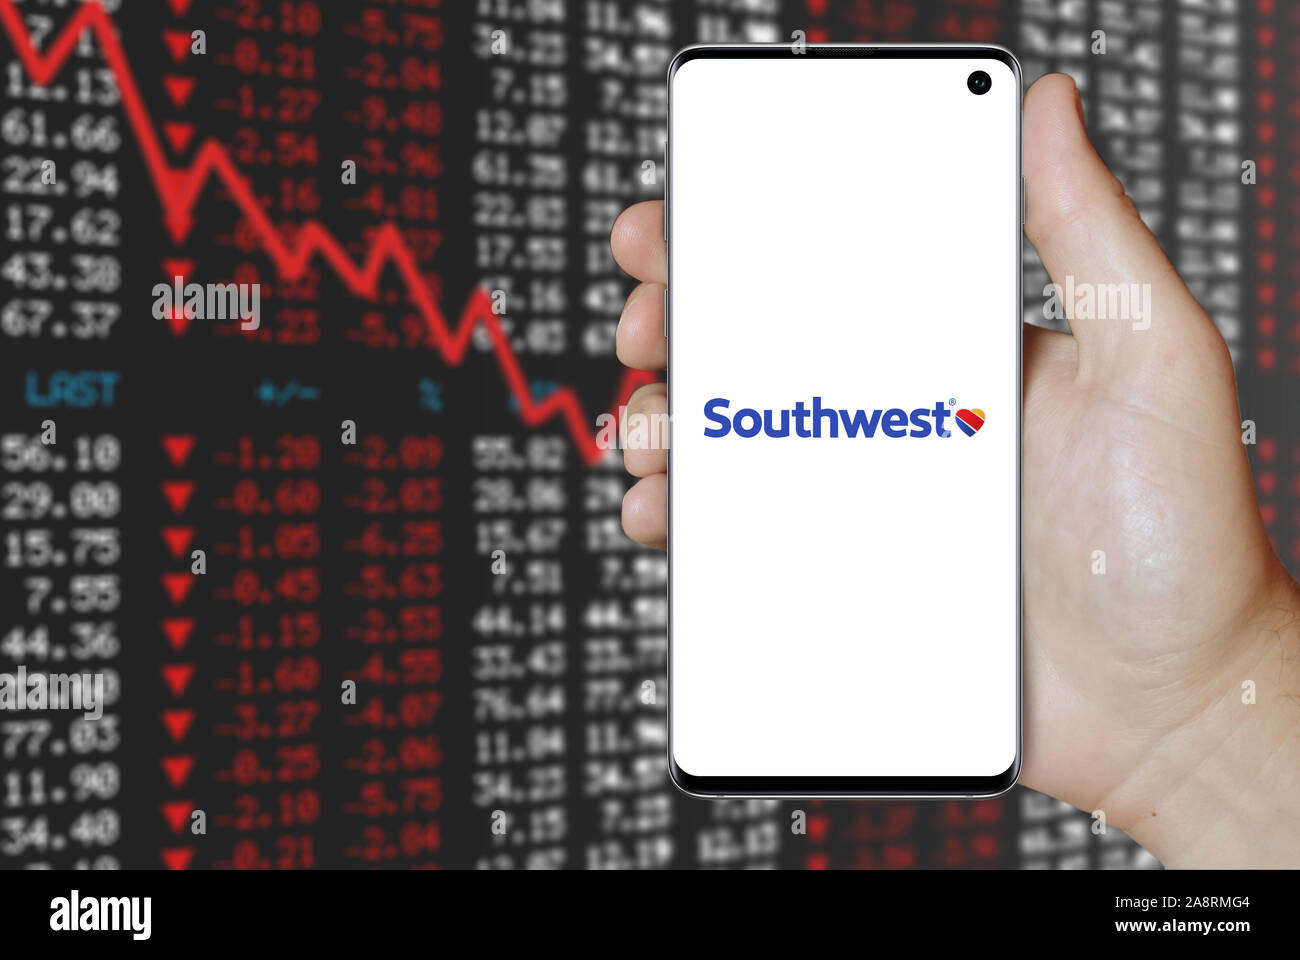 Logo of public company Southwest Airlines displayed on a smartphone. Negative stock market background. Credit: PIXDUCE Stock Photo